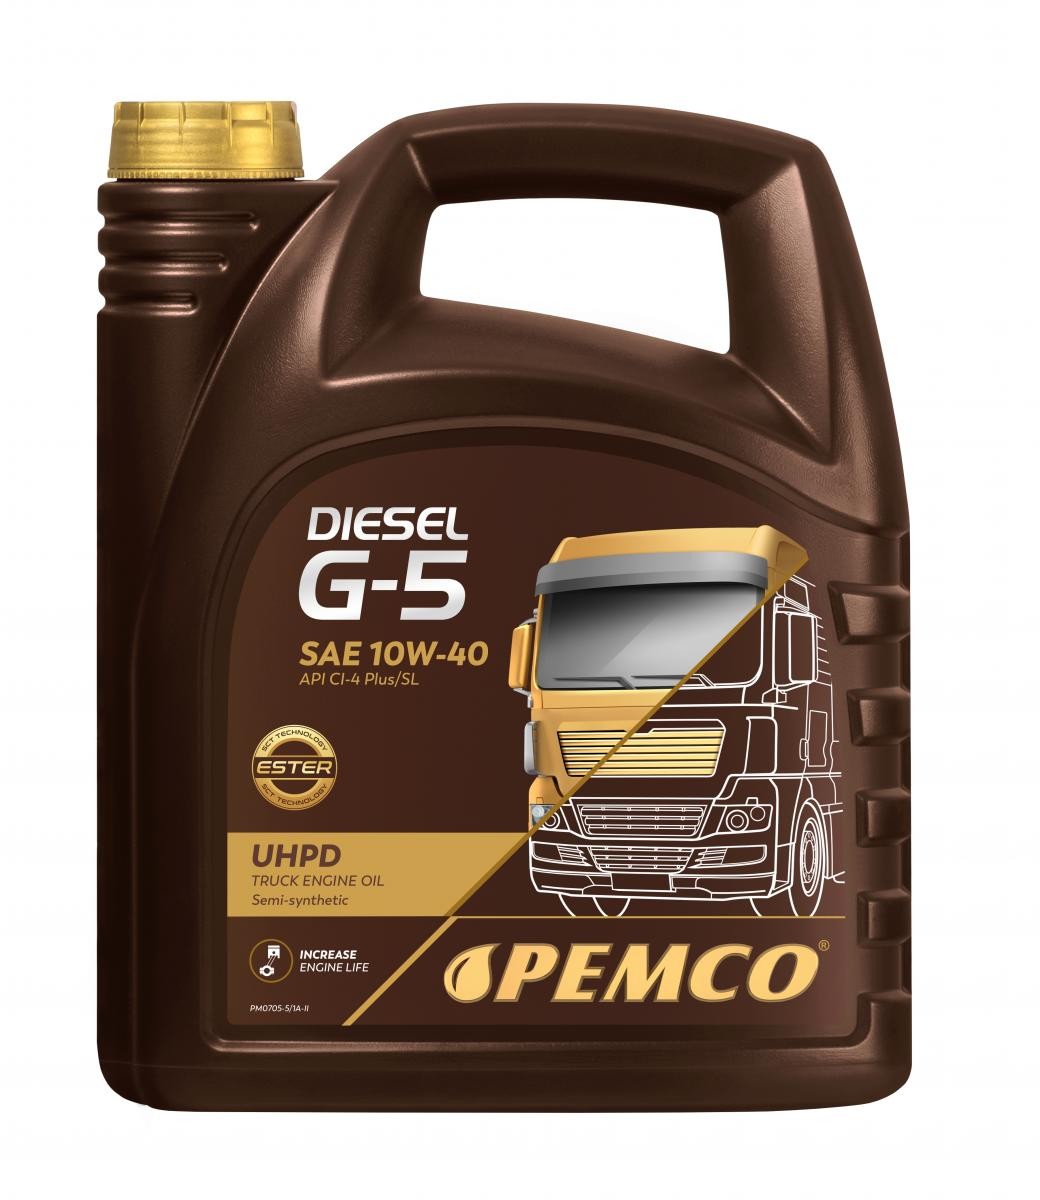 Comprar Aceite motor PEMCO PM0705-5 Truck UHPD, DIESEL G-5 UHPD 10W-40, 5L, aceite parcialmente sintético